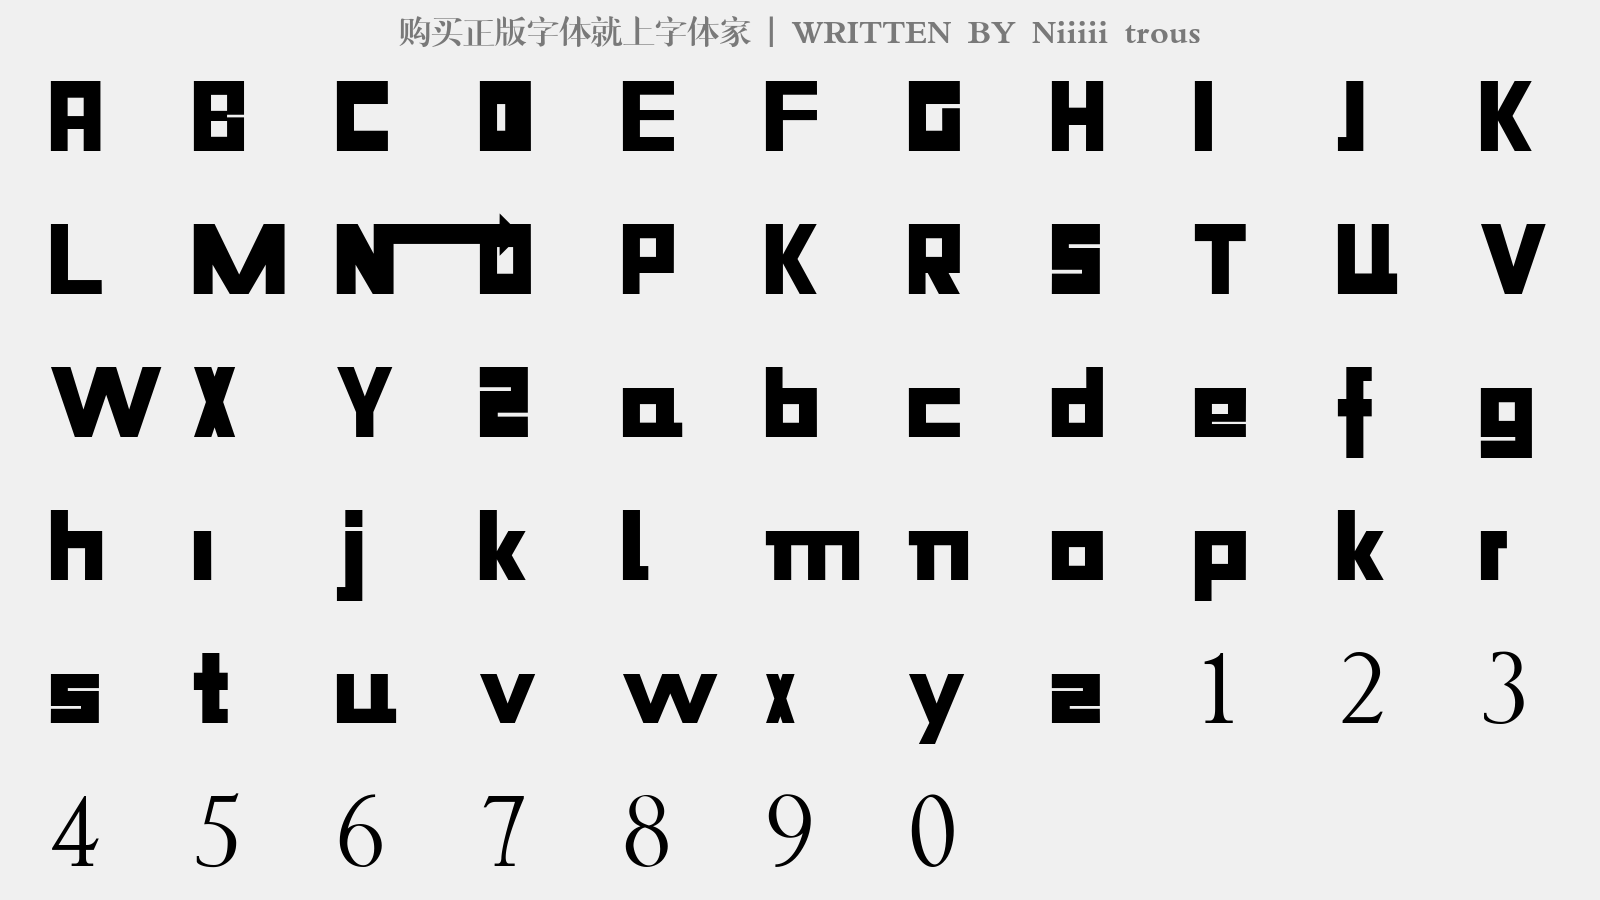 Niiiii trous - 大写字母/小写字母/数字